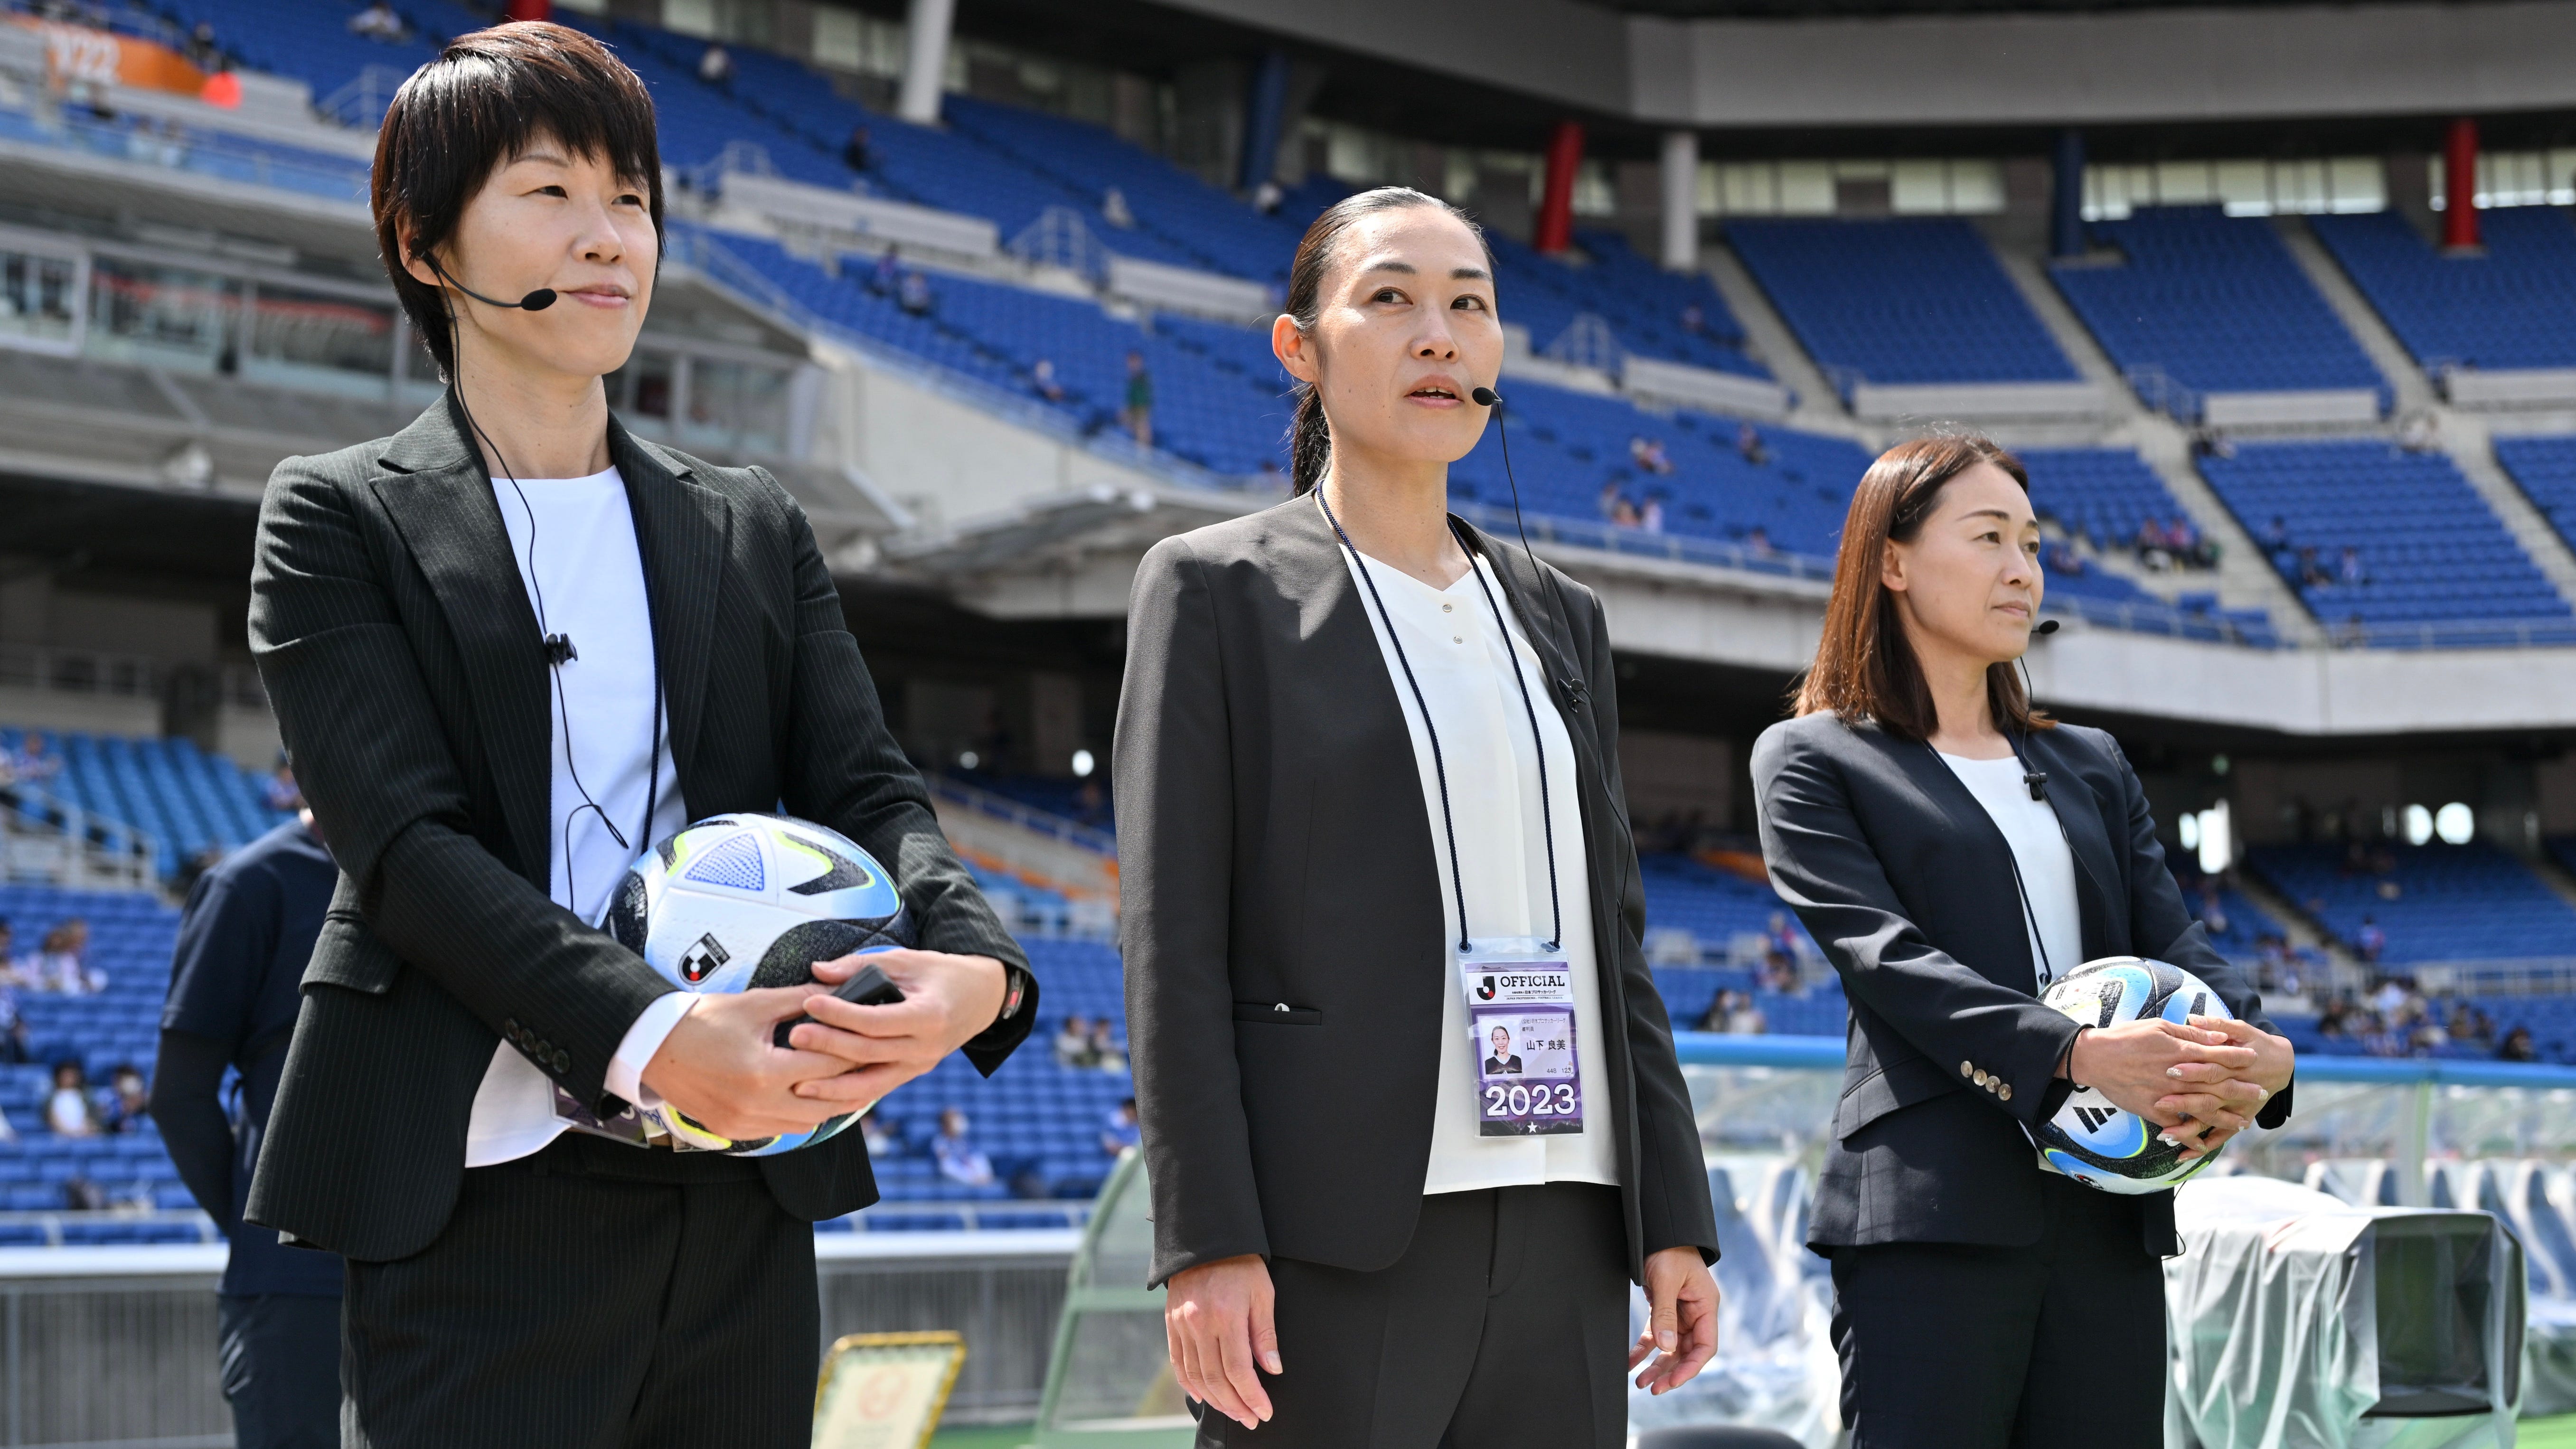 J史上初、女性審判員トリオが実現！歴史的一戦となった横浜FMvs名古屋。長谷川監督は評価「選手たちはストレスを感じていたと思いますが…」 - Goal.com